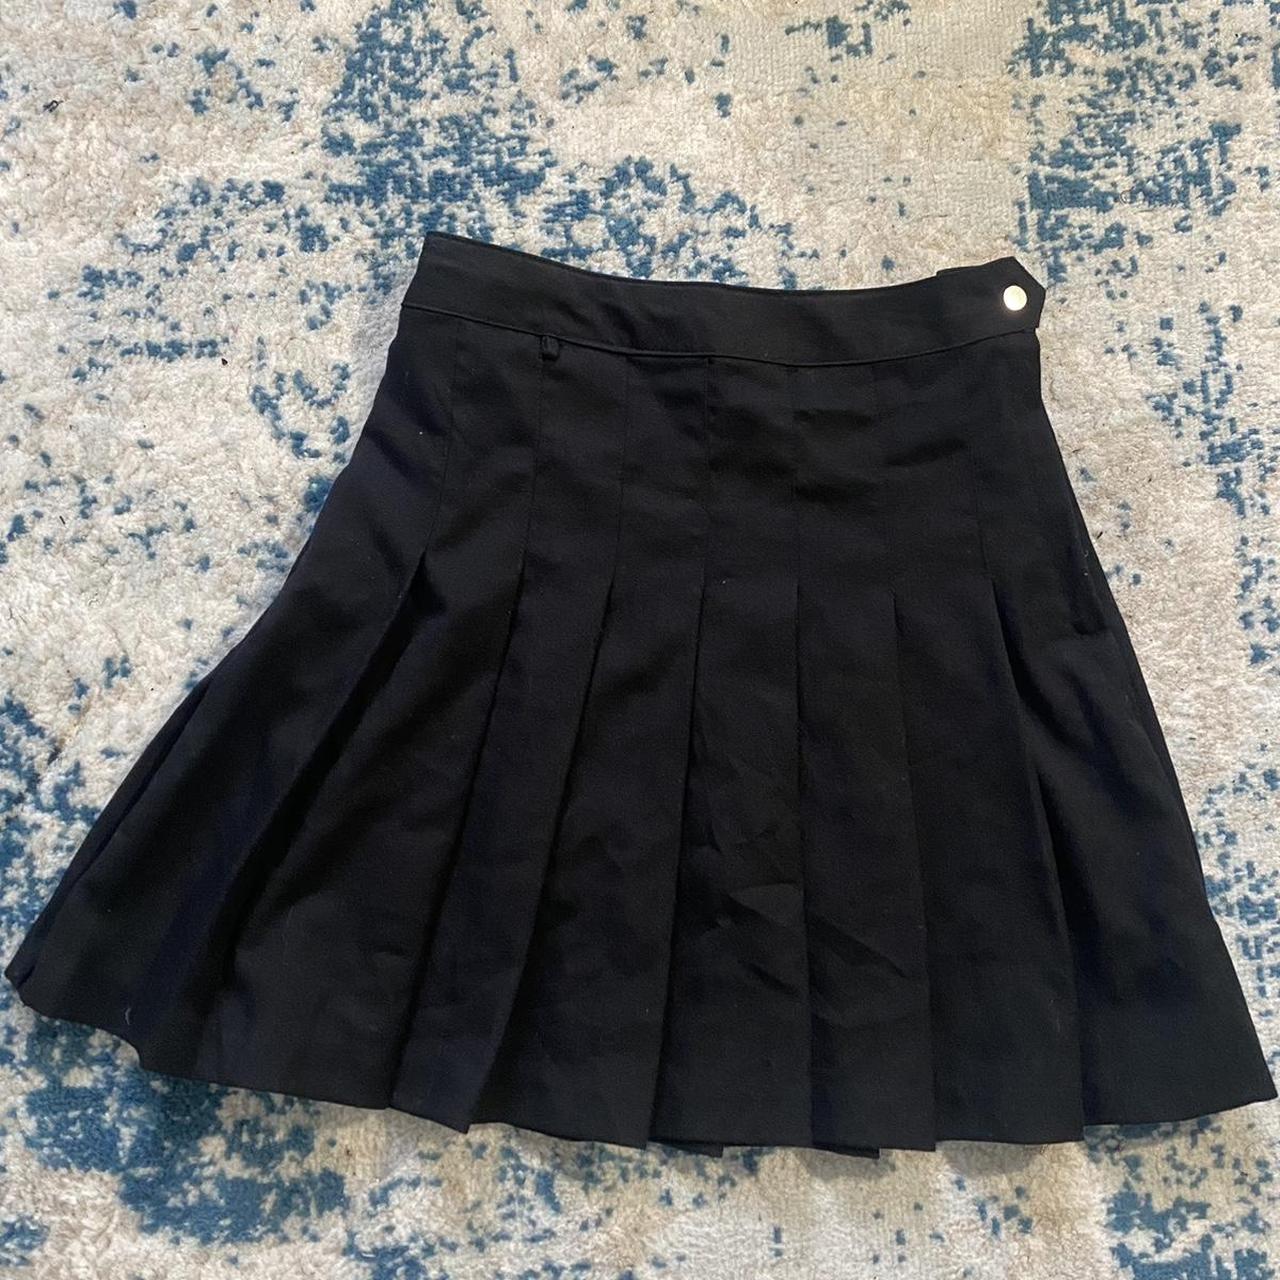 Cute black pleated skirt, super flattering! Fits S... - Depop